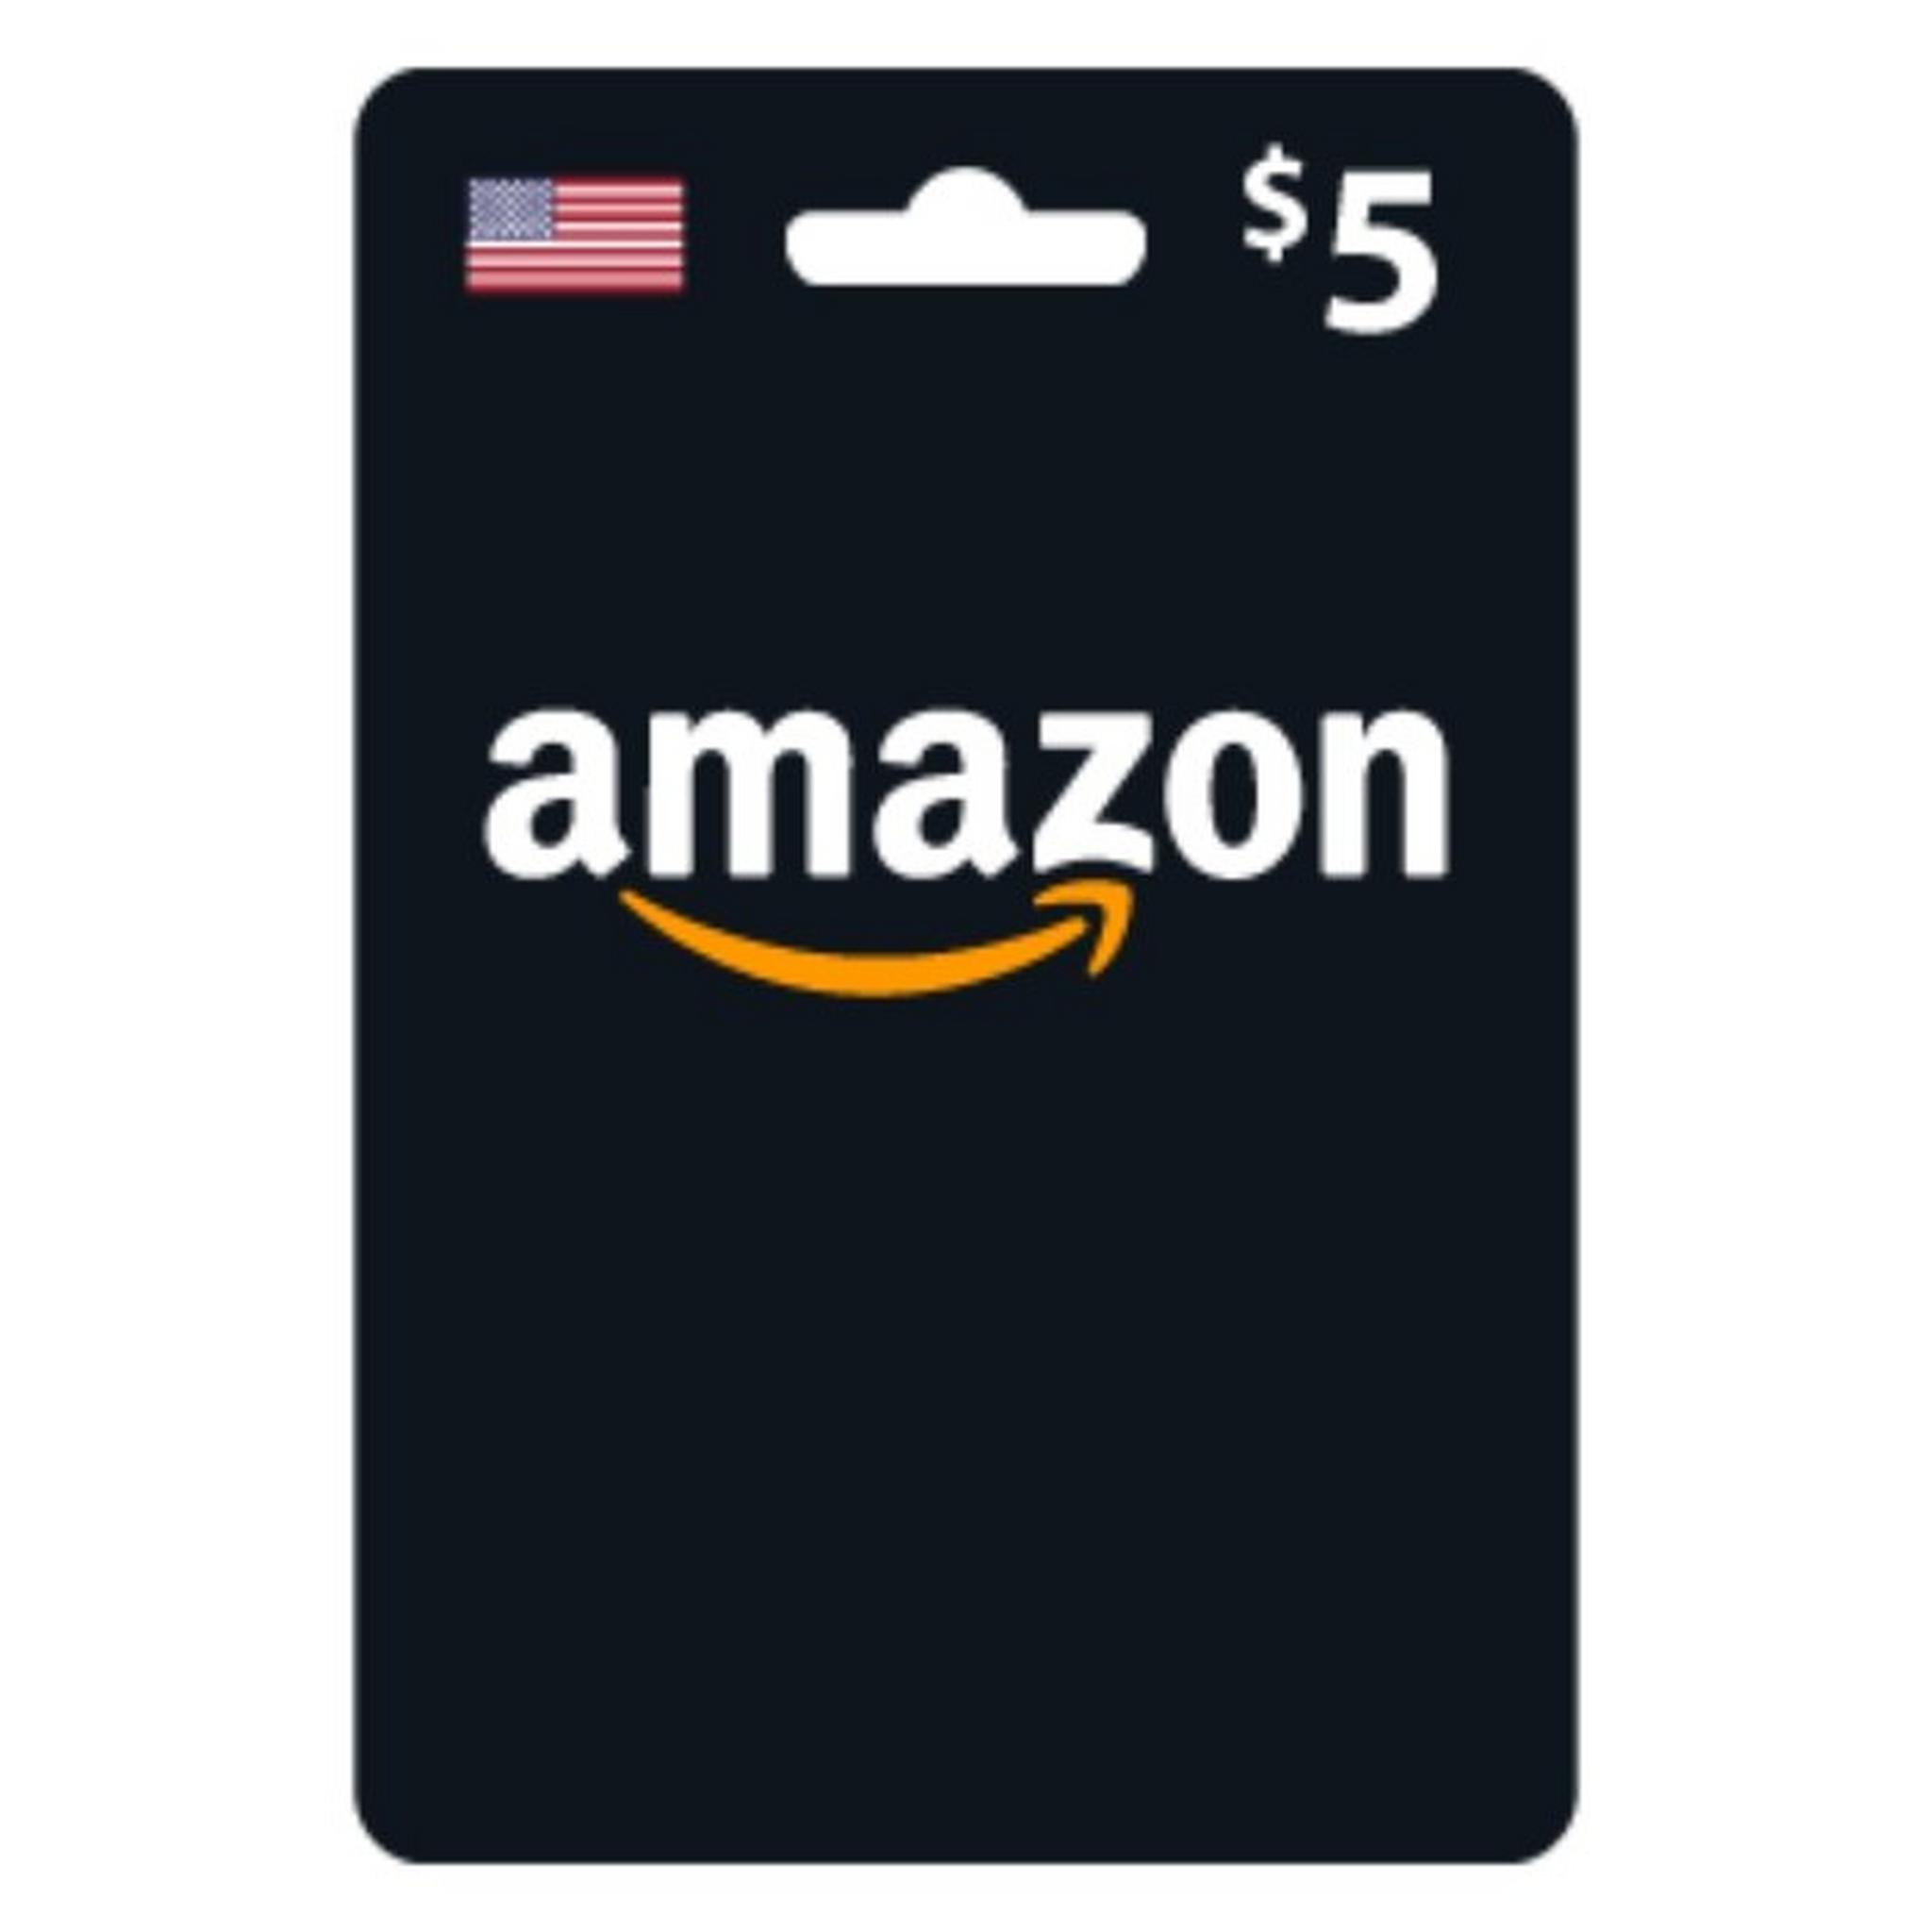 Amazon Gift Card $5 (U.S. Account)